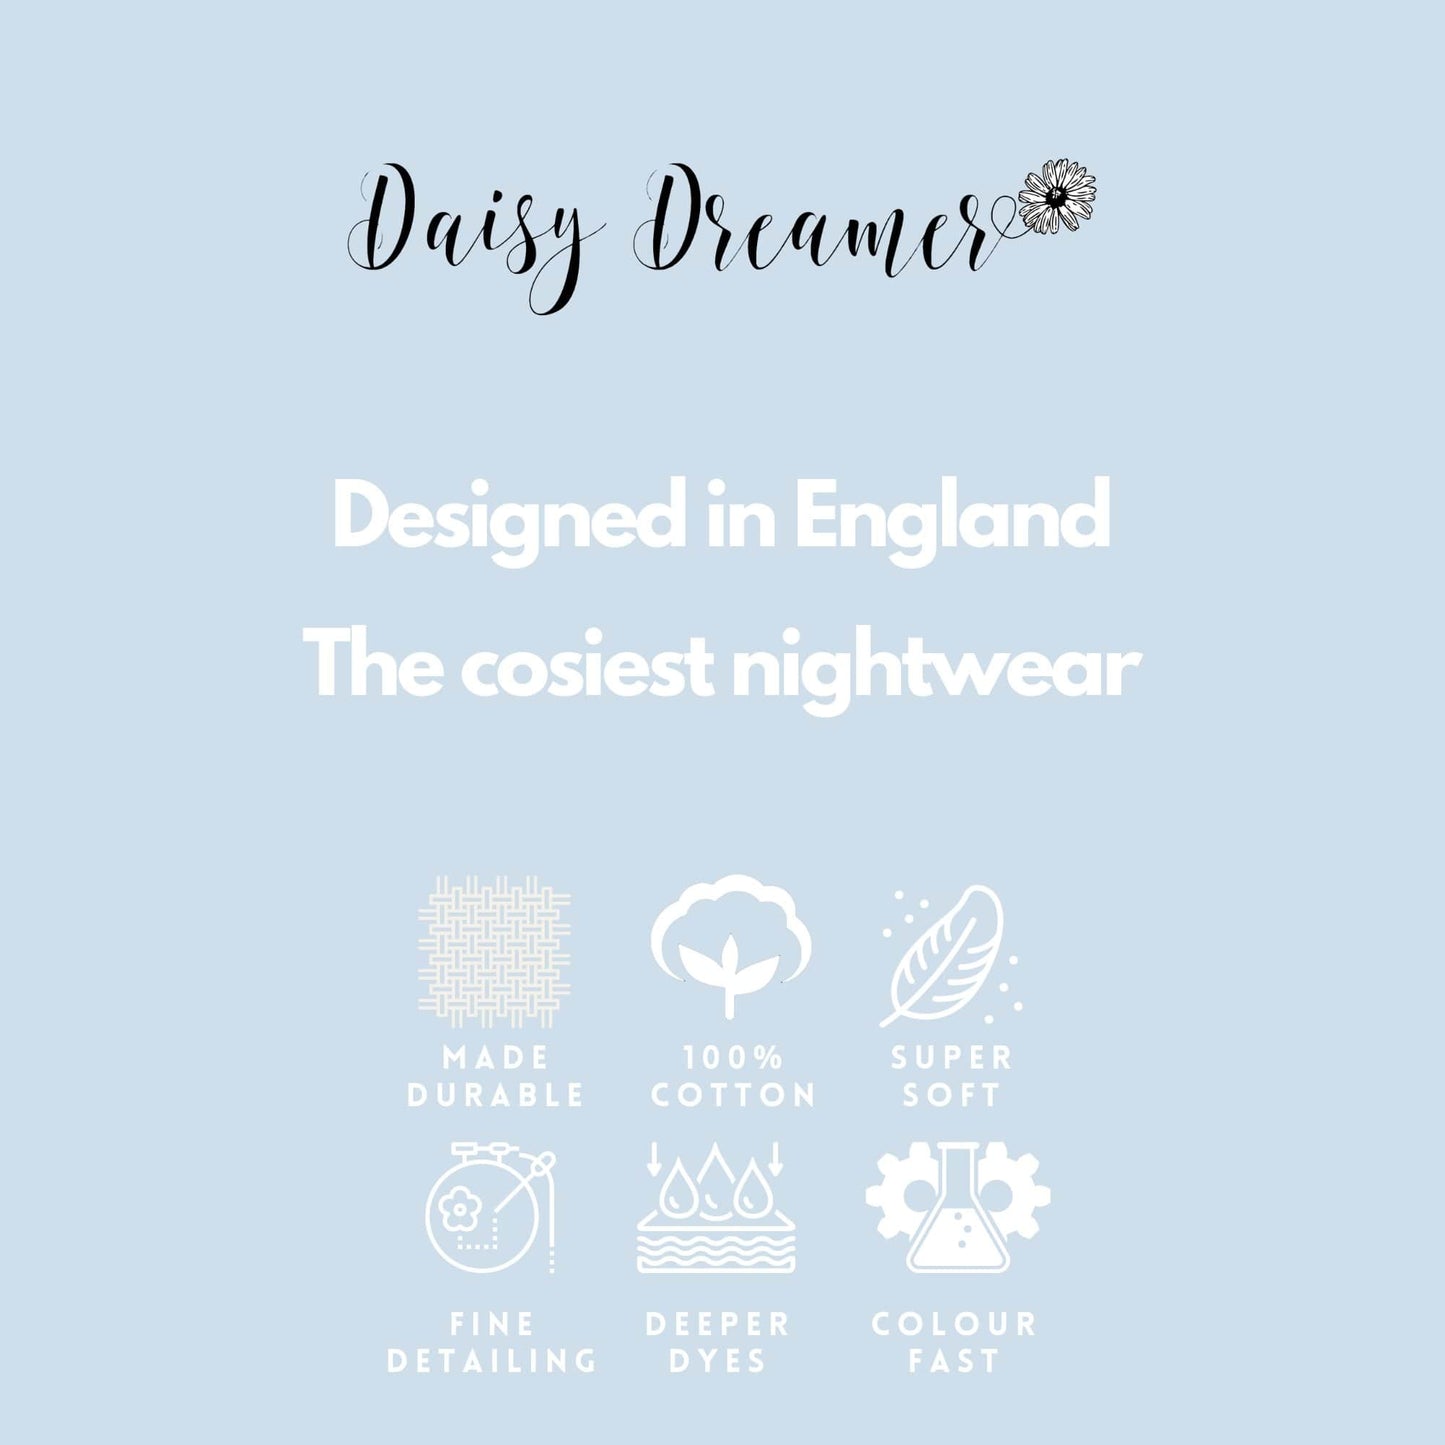 Women's Jersey Marl Loungewear Pyjama Sets Ladies Nightwear. Buy now for £15.00. A Pyjamas by Daisy Dreamer. 12-14, 16-18, 20-22, 8-10, blue, bottom, casual, comfortable, cotton, daisy dreamer, grey, gym, half, home, hotel, jersey, loungewear, marl blue,